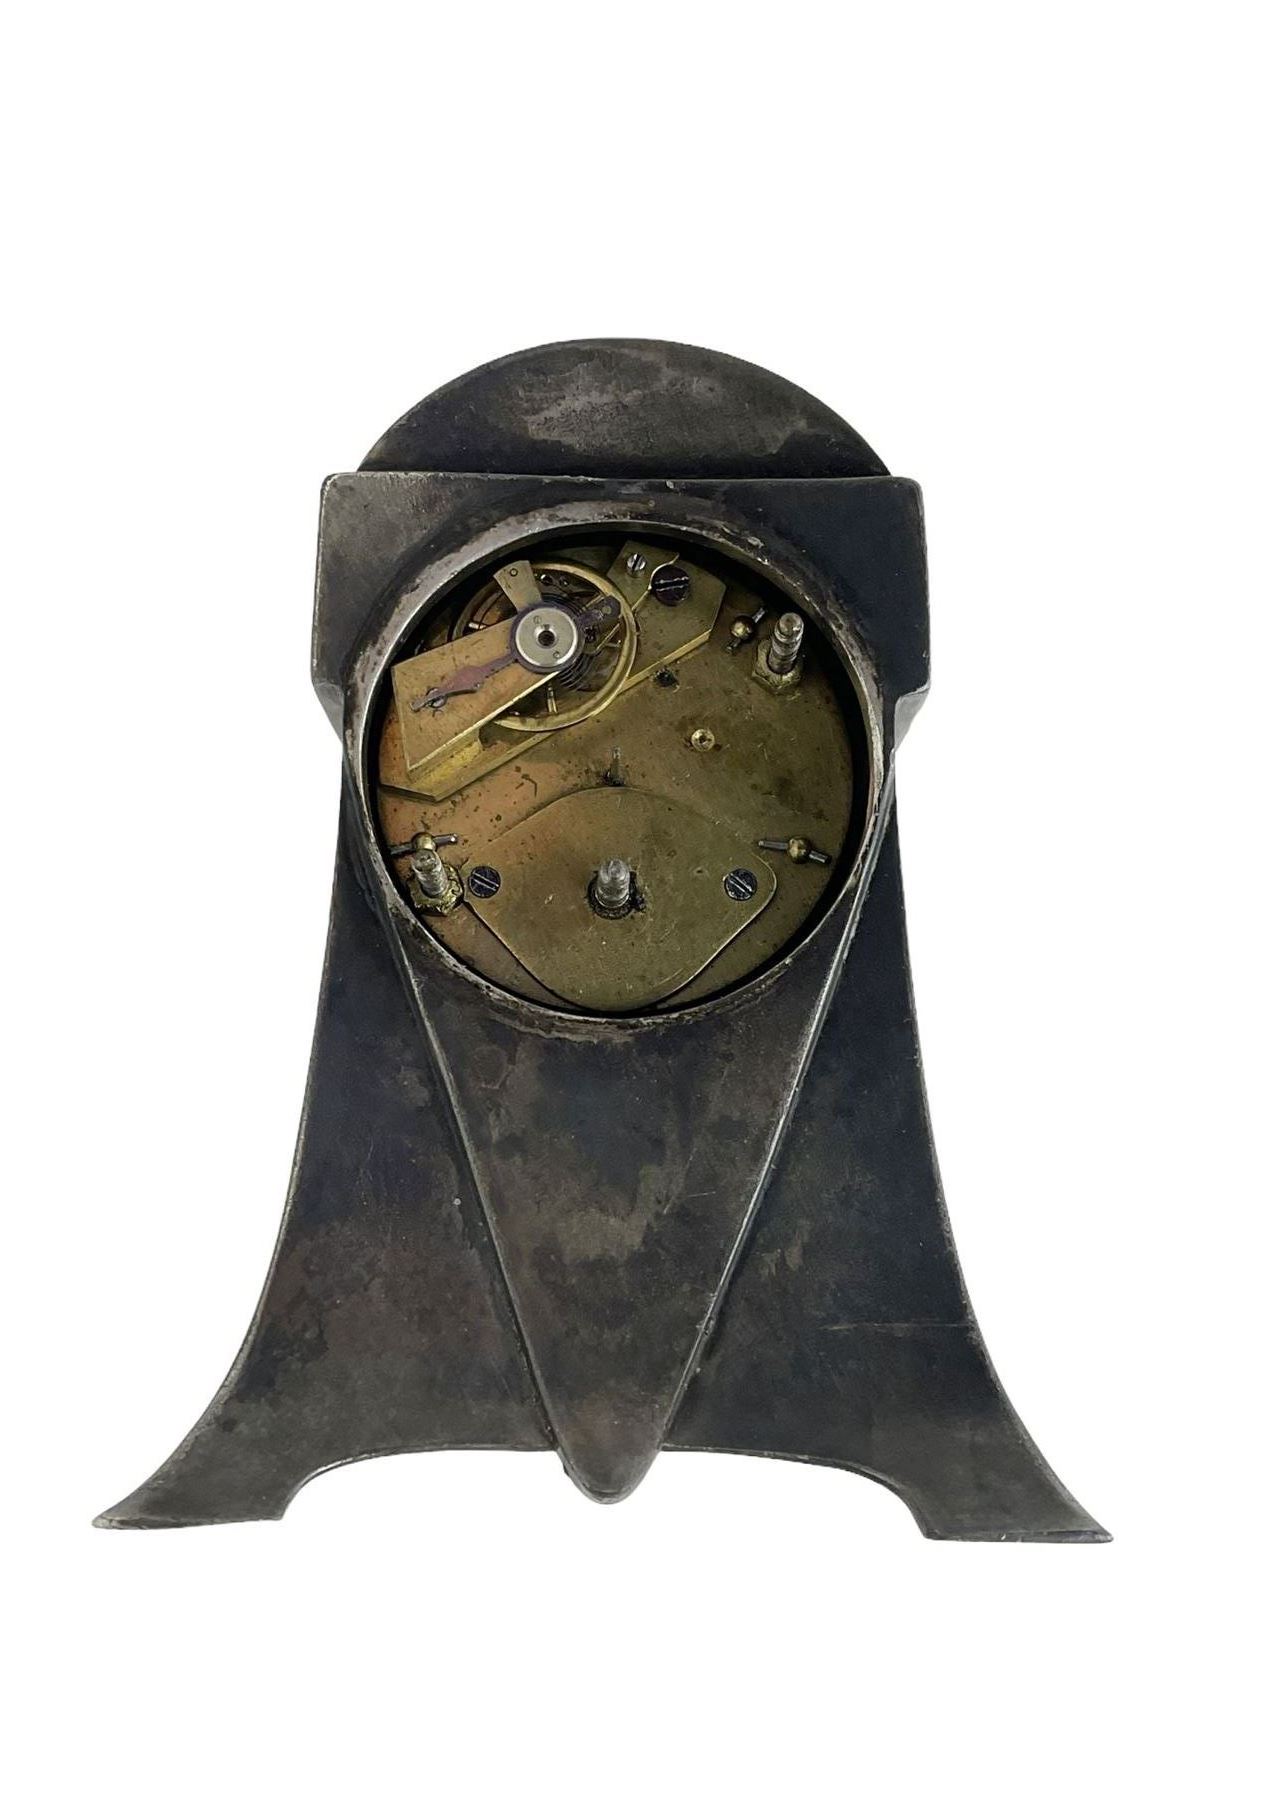 Metallwarenfaberic Straub & Schweizer - WMF silver plated timepiece clock c1910 in the aesthetic mov - Image 4 of 5